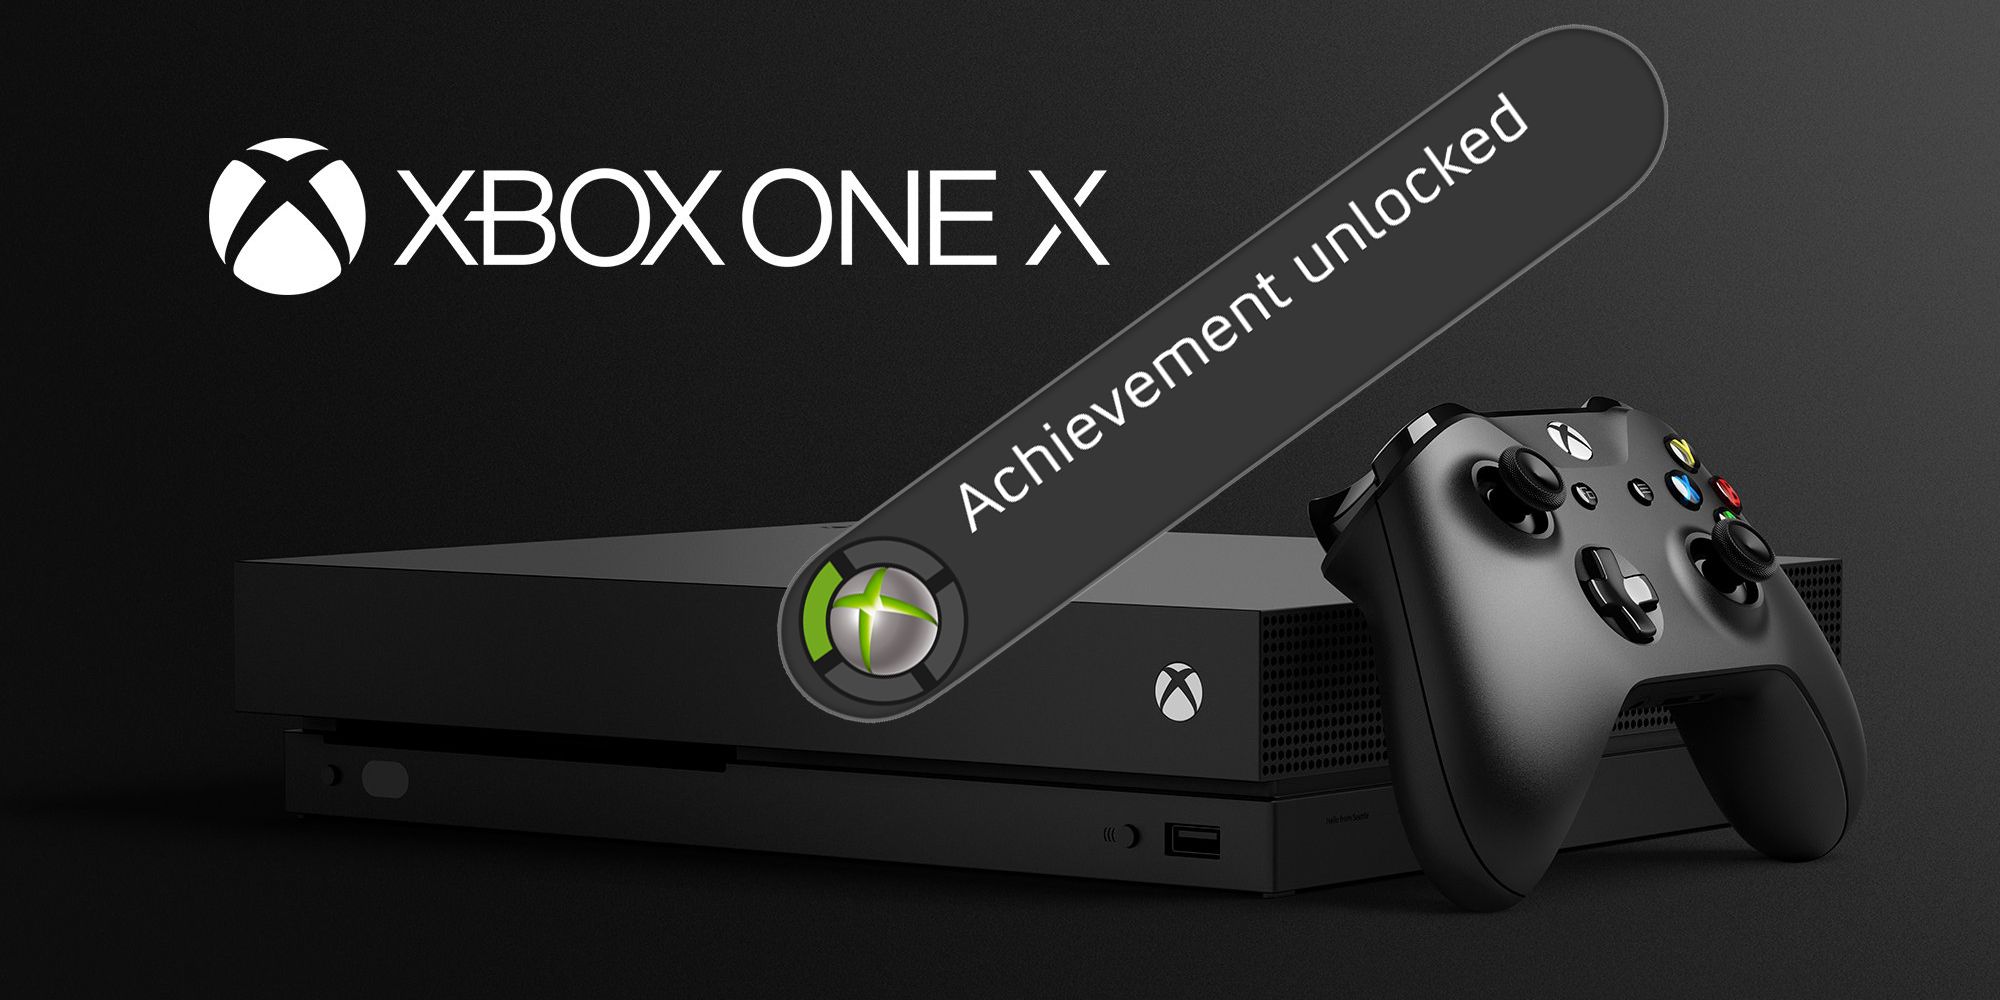 best games to get achievements xbox one